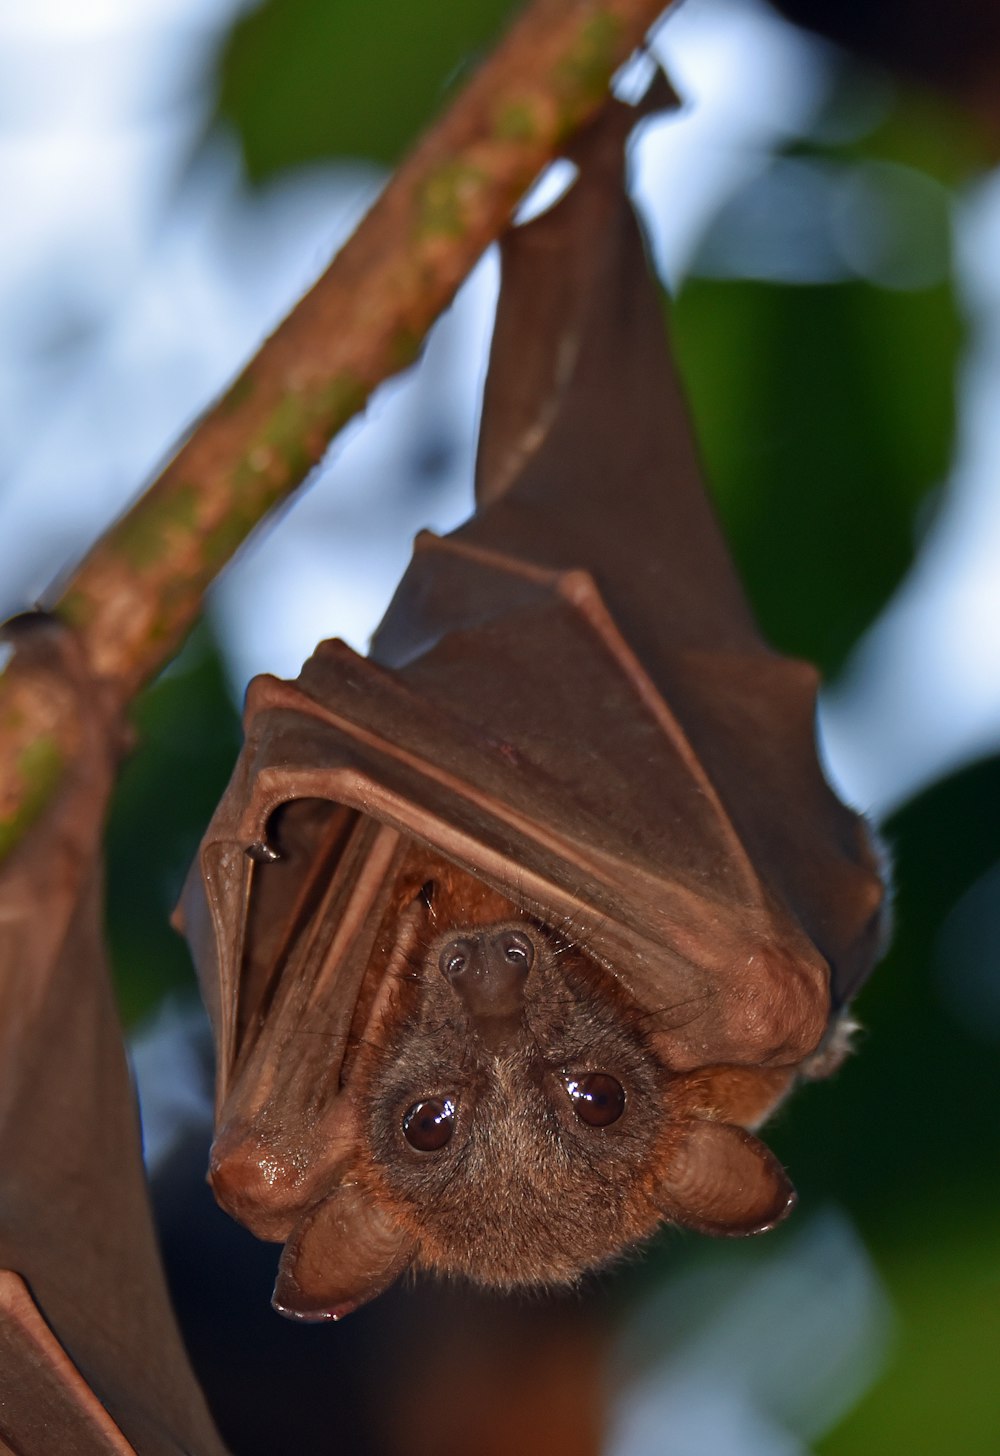 brown bat in close up photo